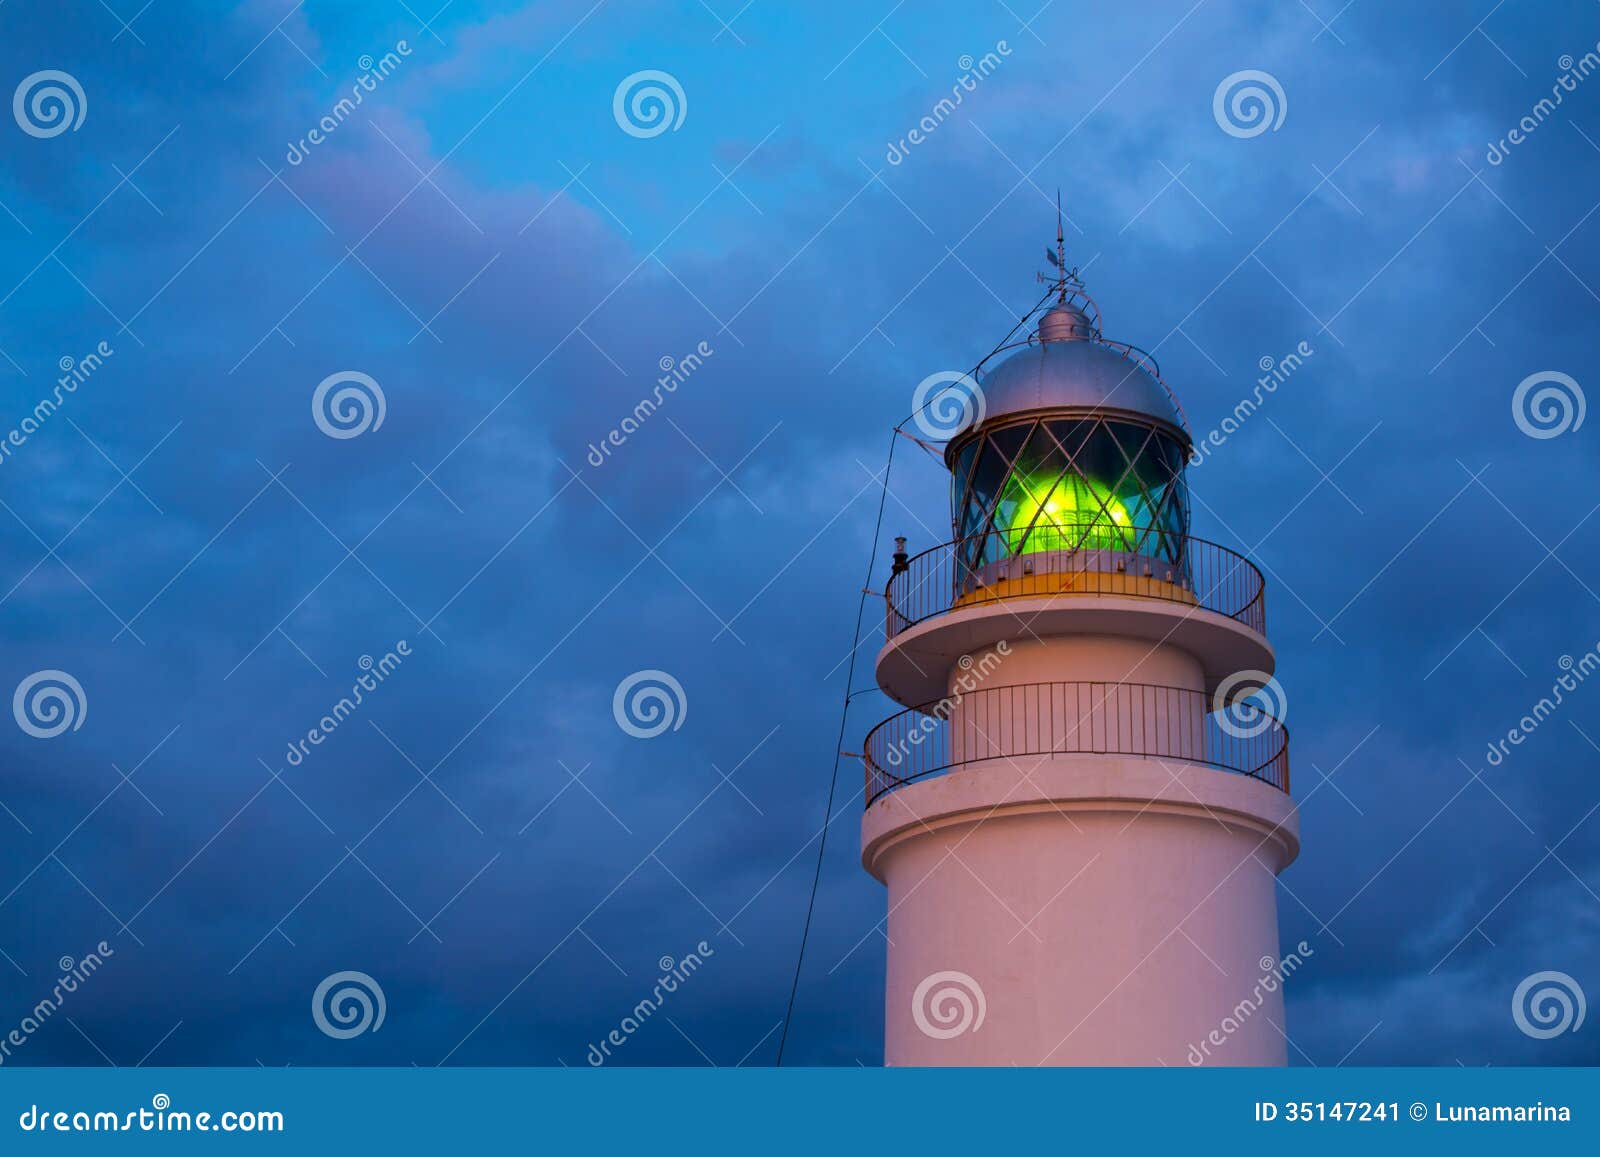 menorca sunset at faro de caballeria lighthouse